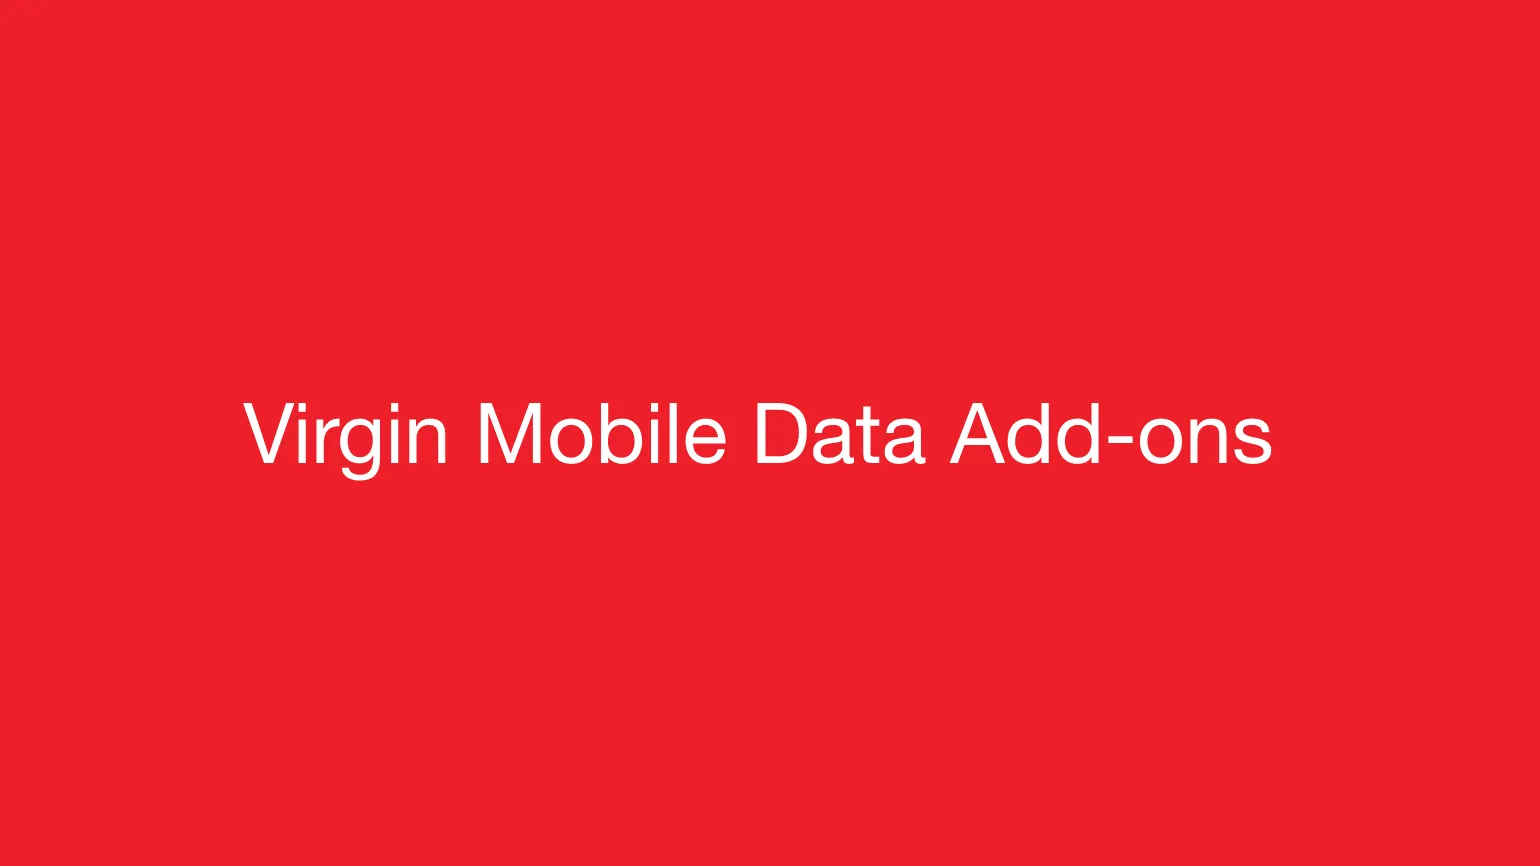 Virgin Mobile data add-ons when roaming